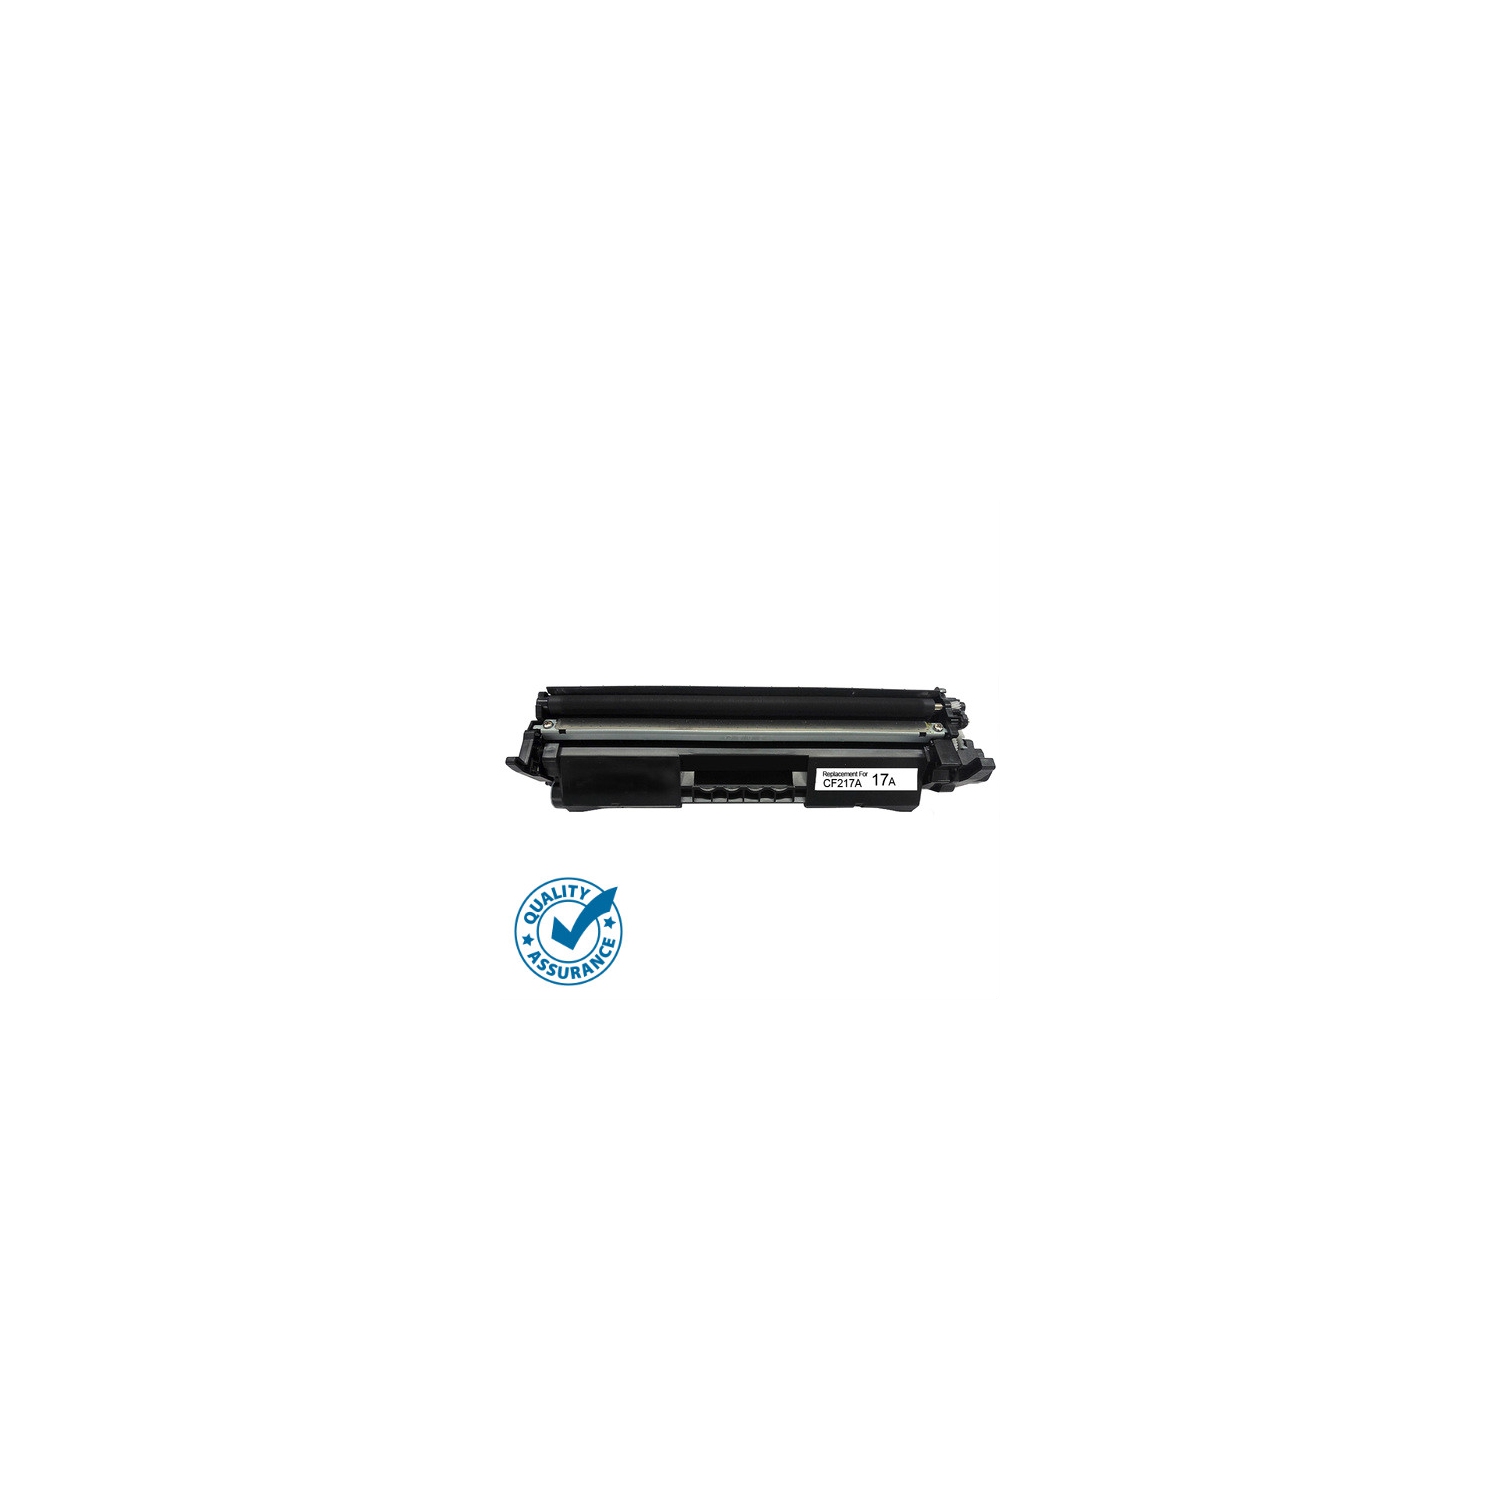 Printer Pro™ HP 17A (CF217A) Black Toner Cartridge for HP Printer Laserjet Pro MFP M130fn M130a M130fw M130nw M102a M102w